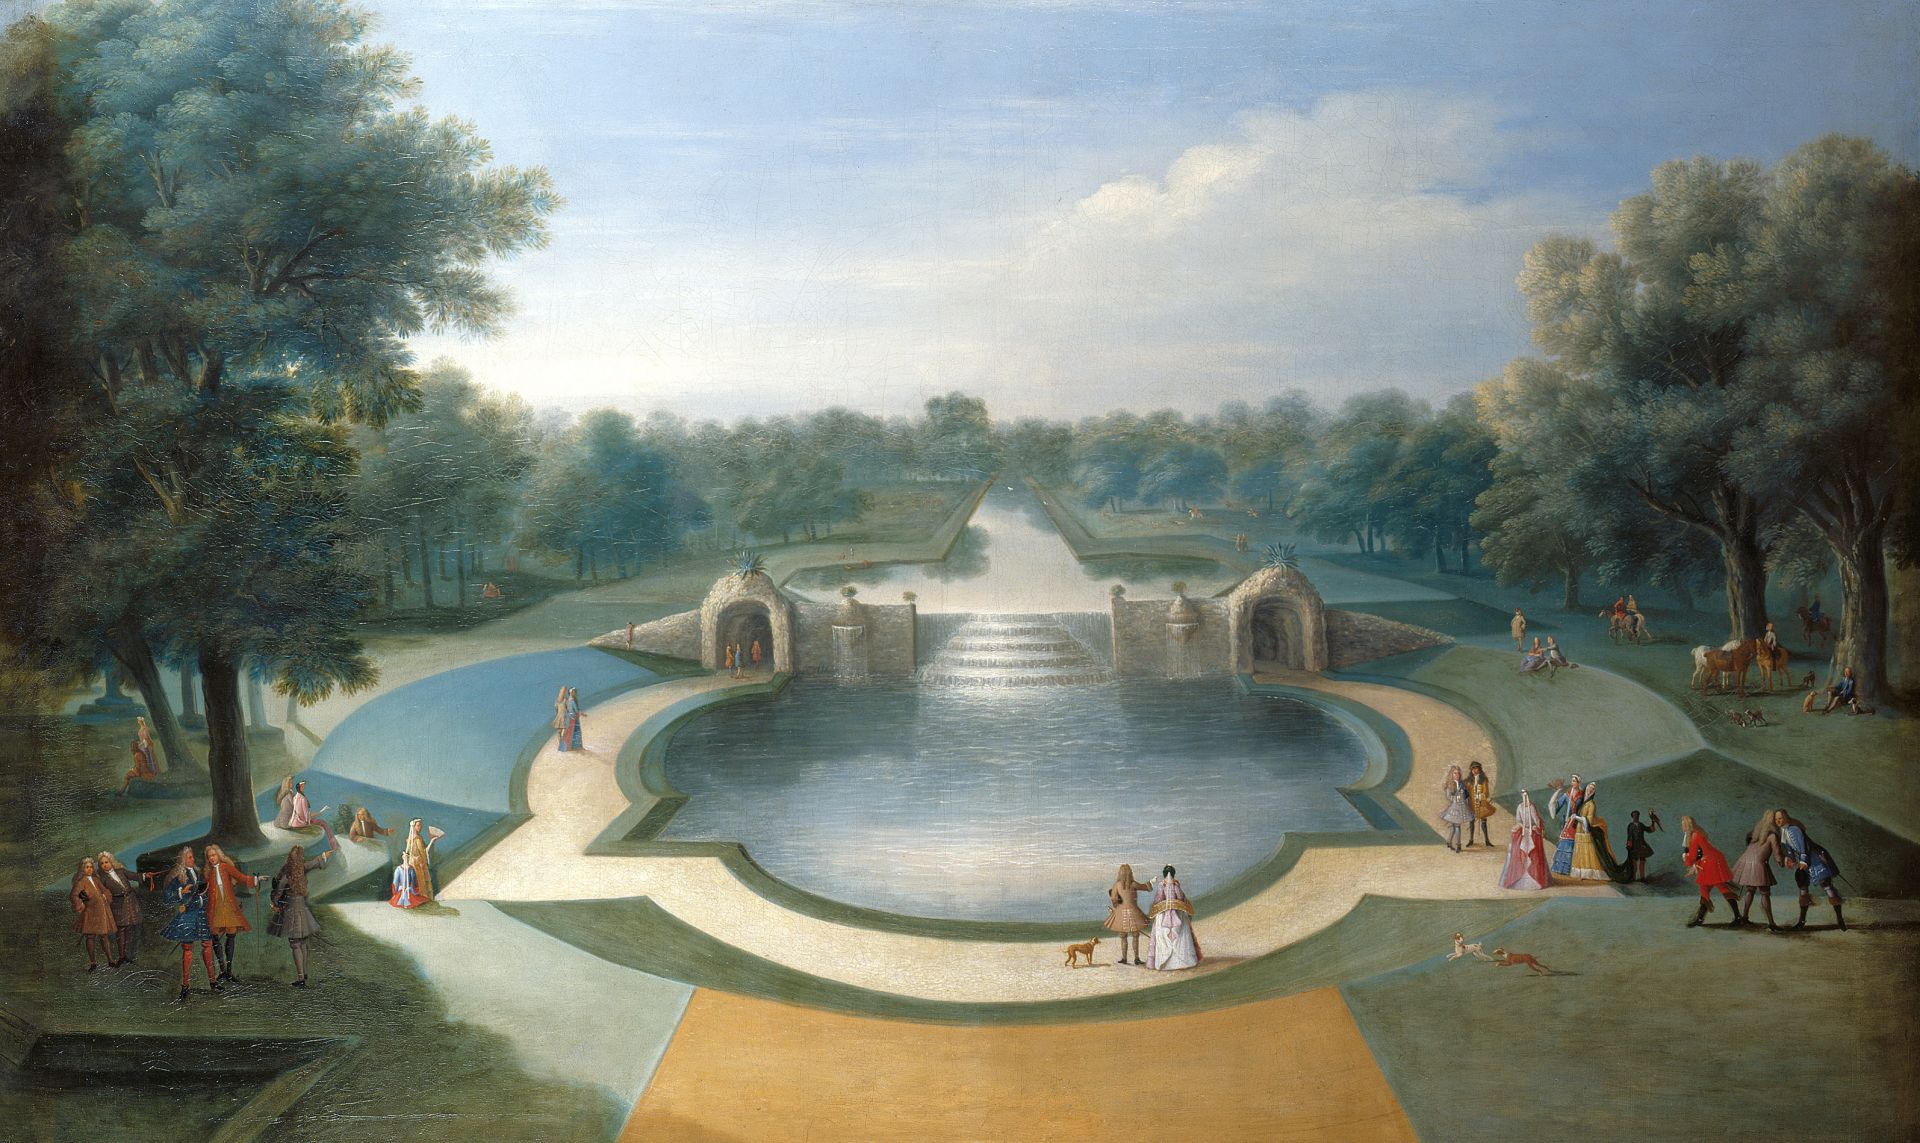 Studio of Marco Ricci, A View of the Cascade, Bushey Park Water Gardens, 1715